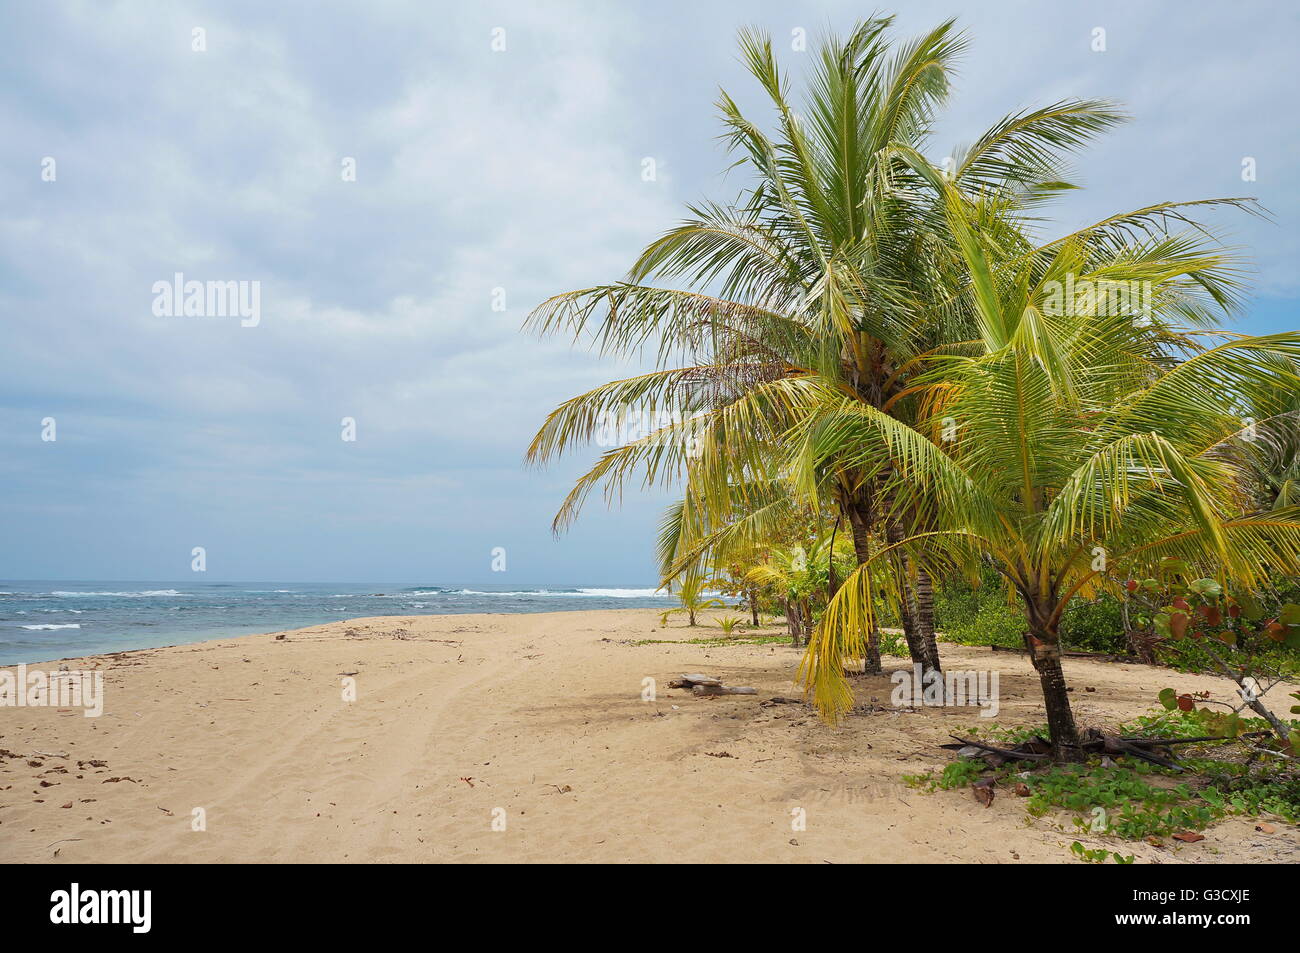 Sandy beach with coconut trees on the Caribbean coast of Costa Rica, Puerto Viejo de Talamanca, Central America Stock Photo